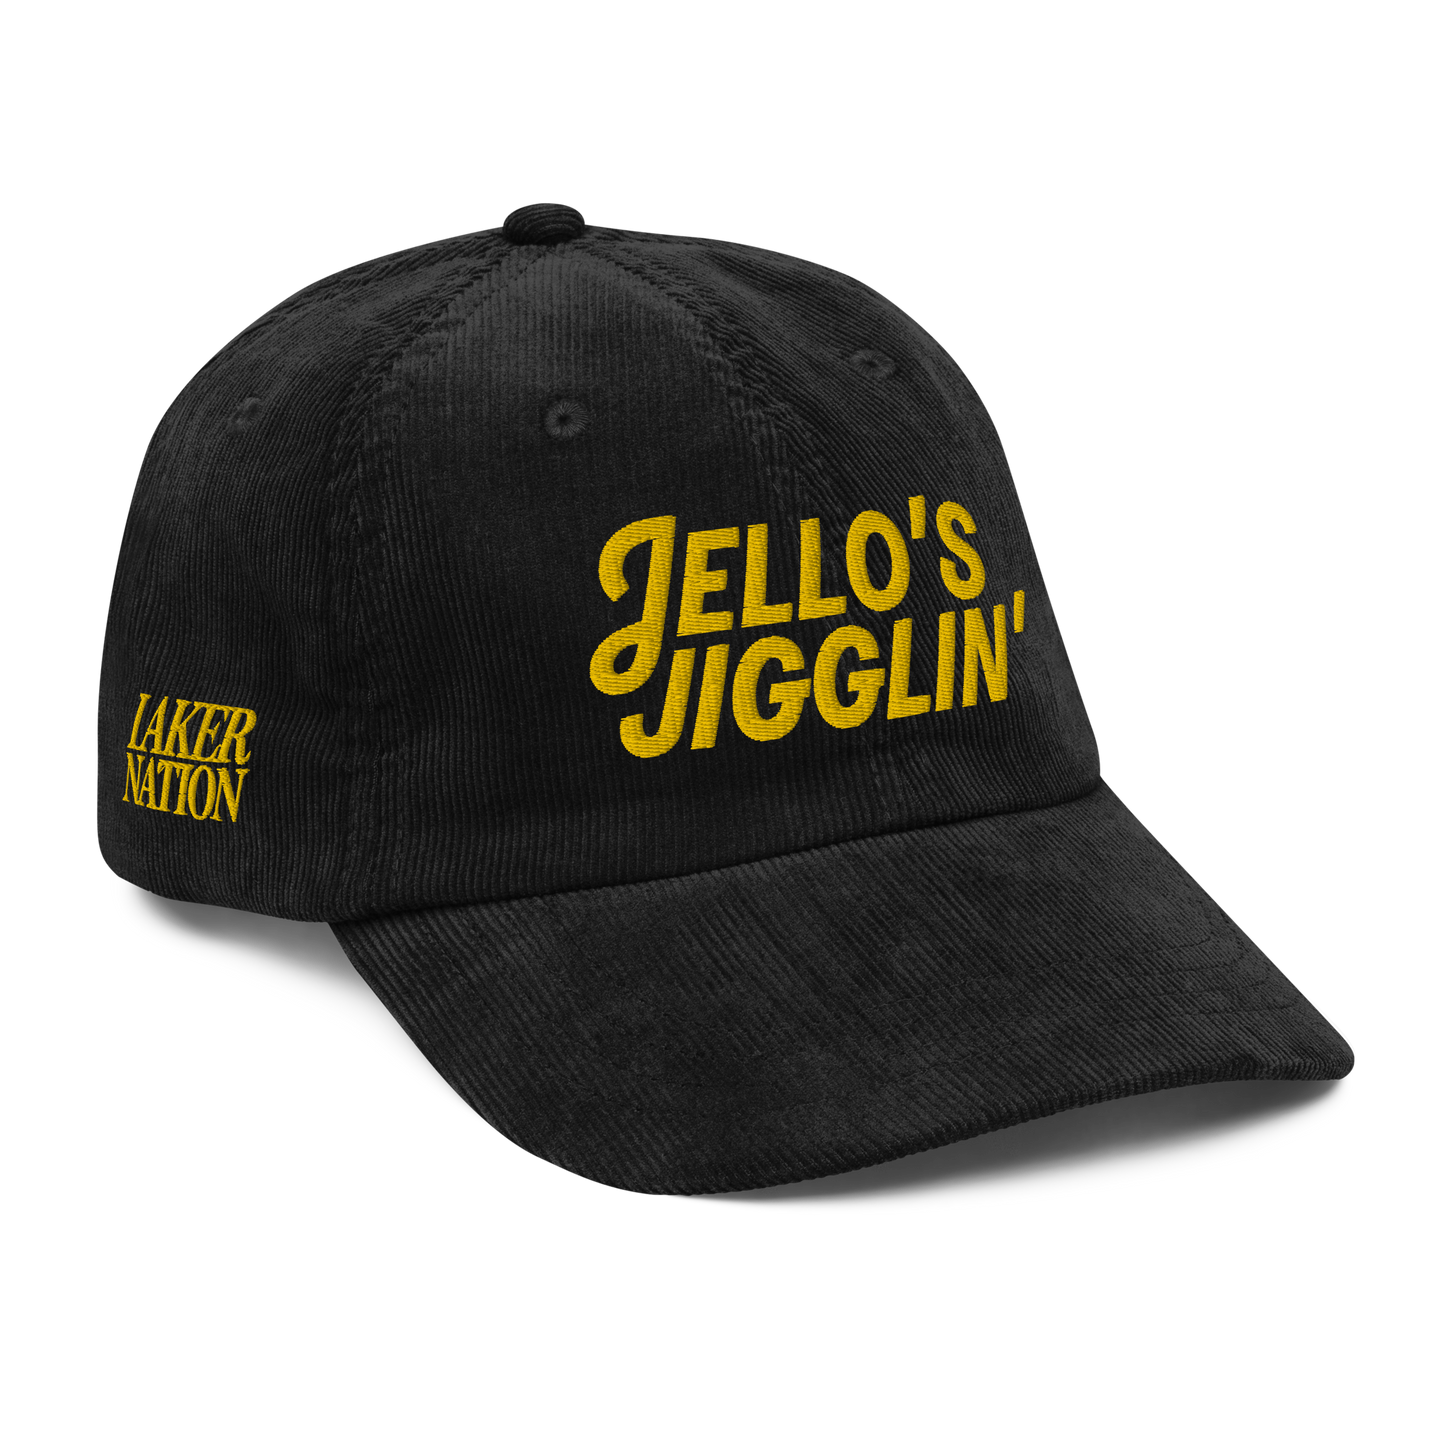 Jello's Jigglin' Hat